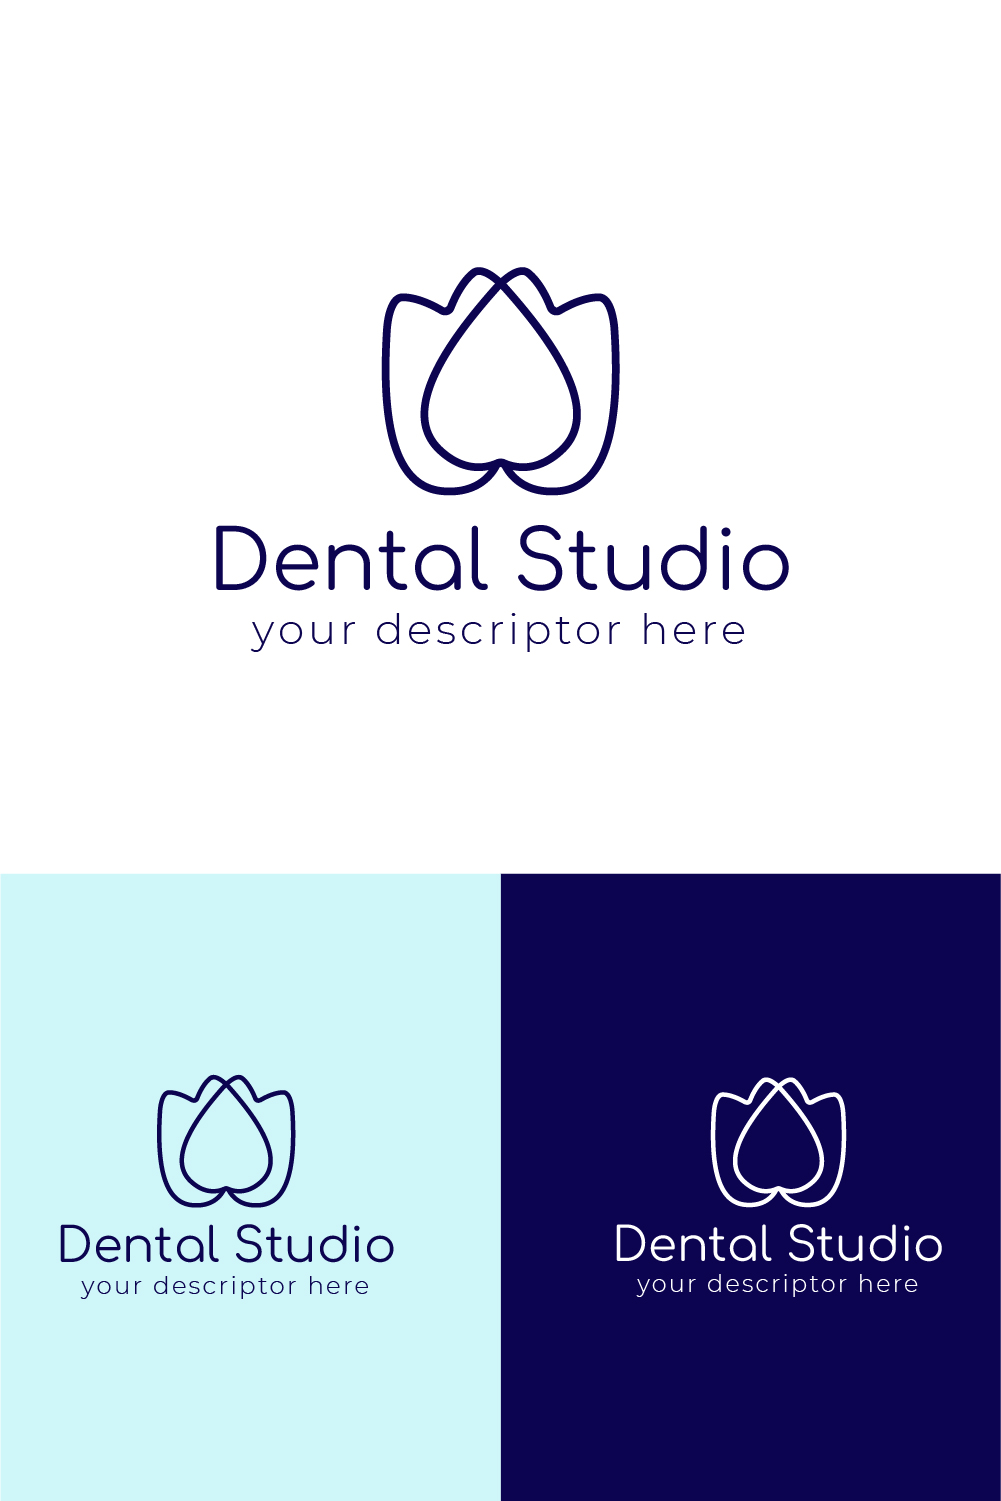 lotus dental logo pinterest preview image.